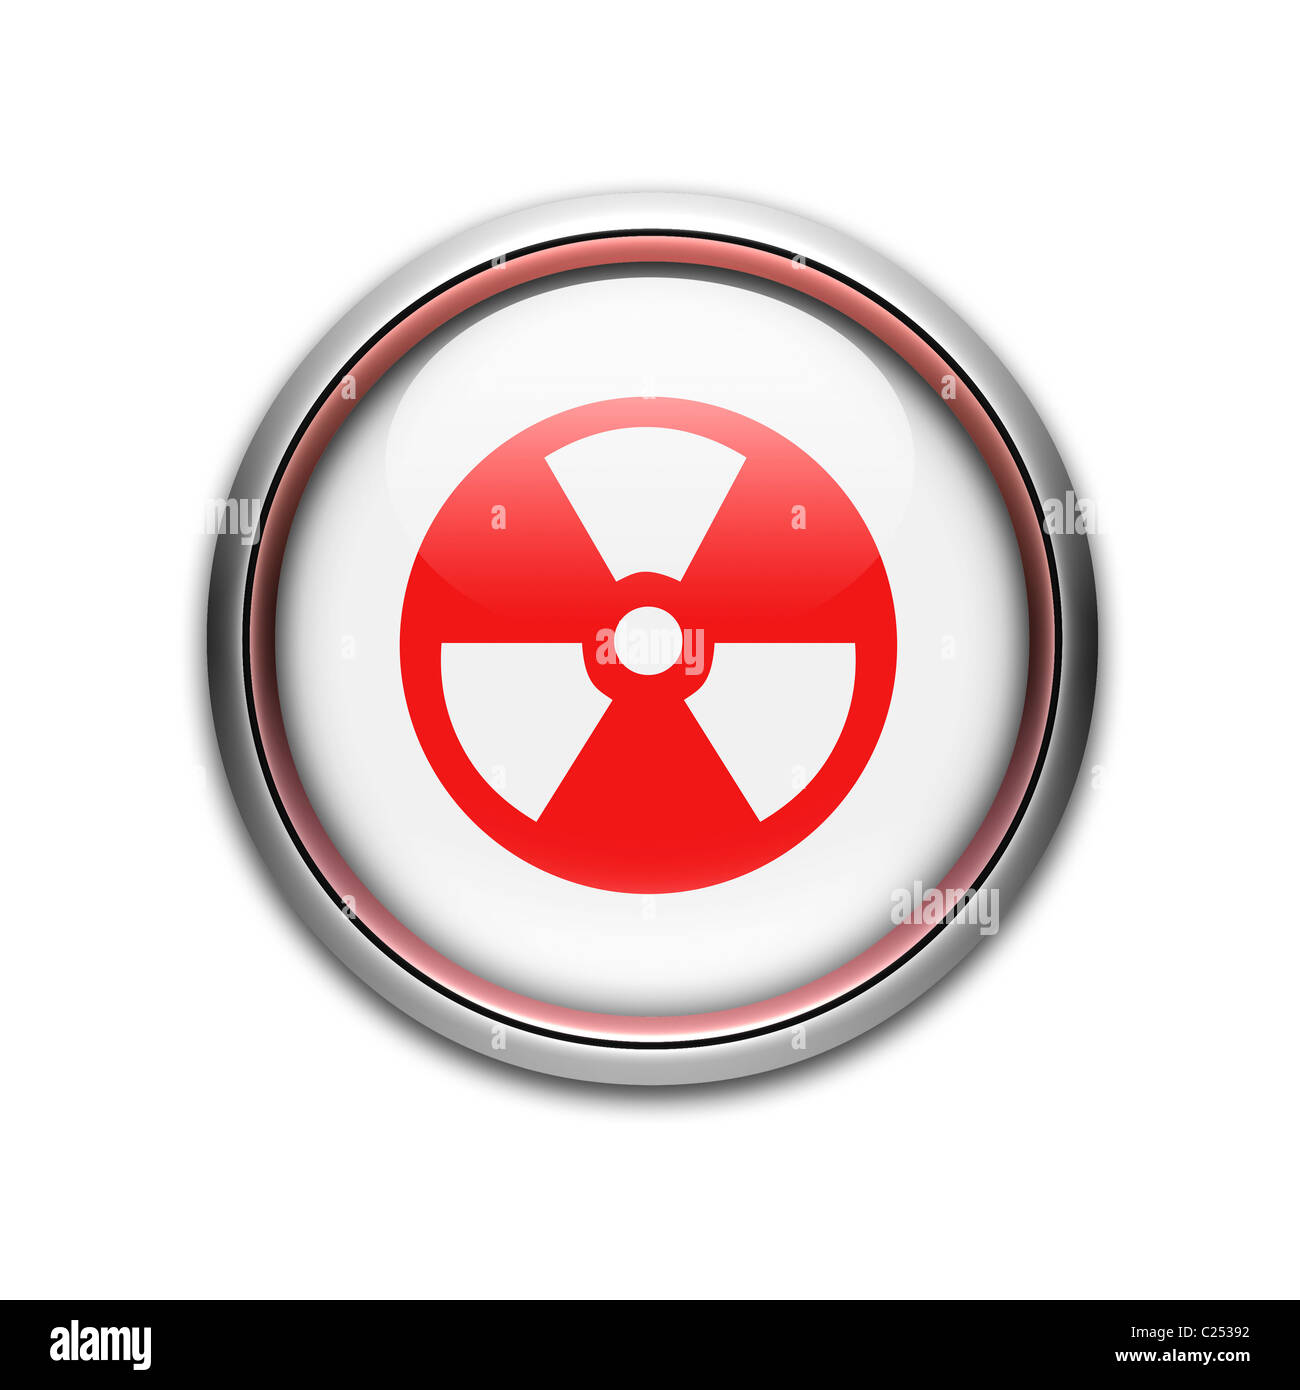 Japan radioactive - nuclear catastrophe Stock Photo